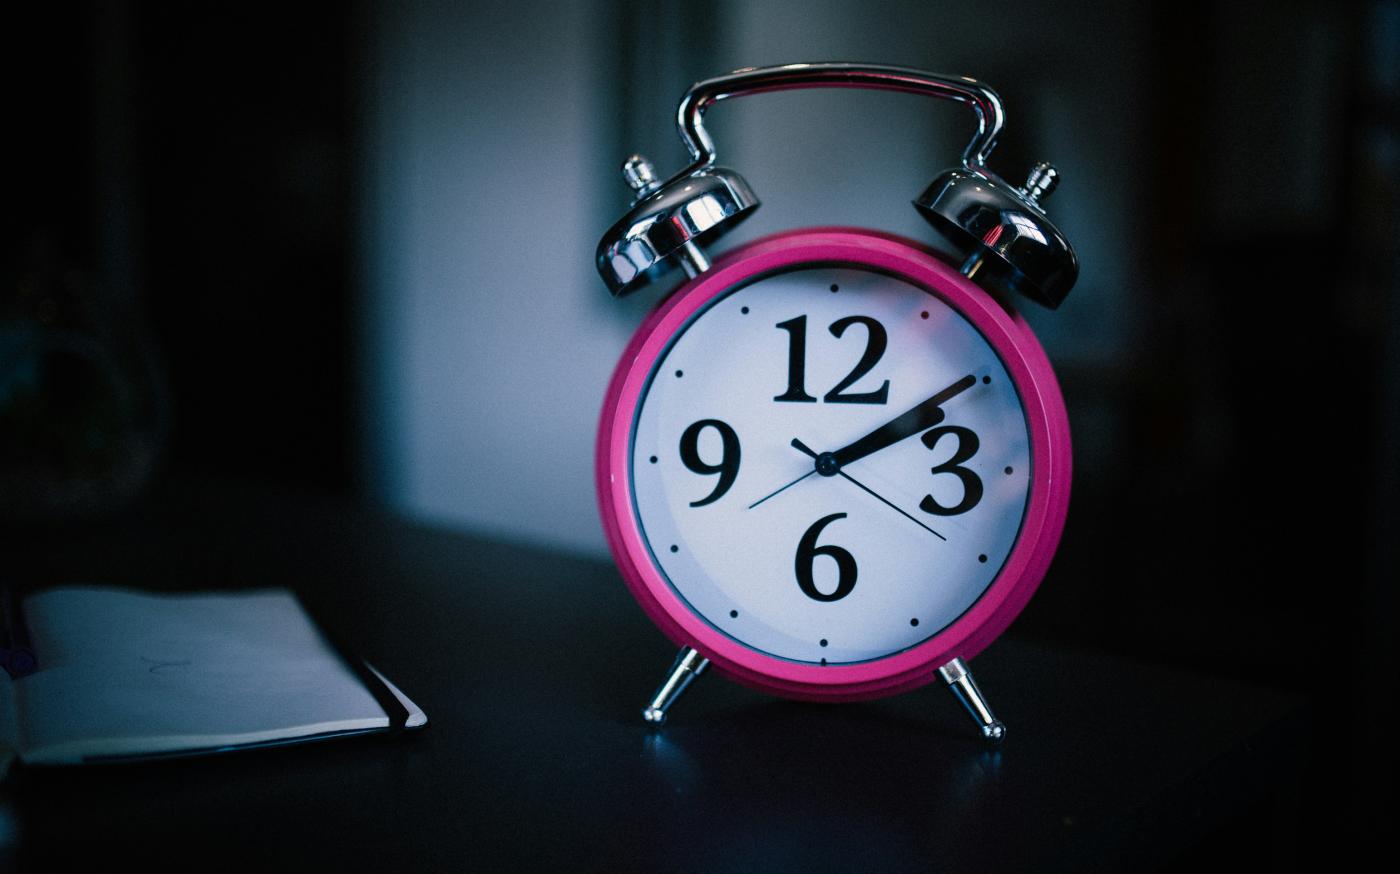 pink bell alarm clock showing 2:10 by Mpho Mojapelo courtesy of Unsplash.